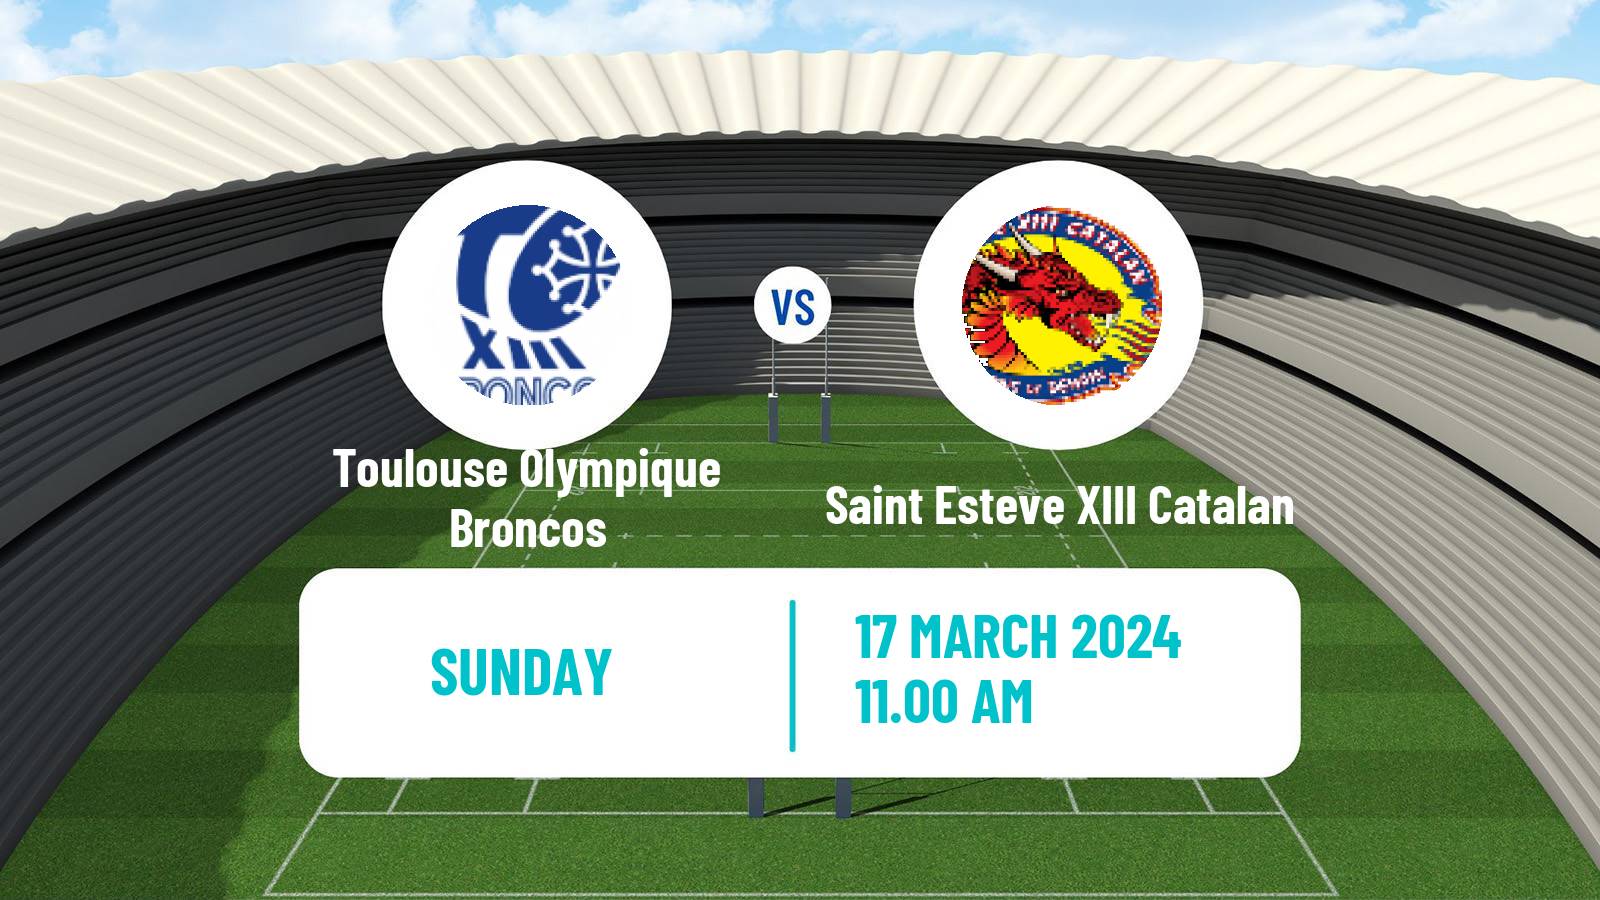 Rugby league French Elite 1 Rugby League Toulouse Olympique Broncos - Saint Esteve XIII Catalan